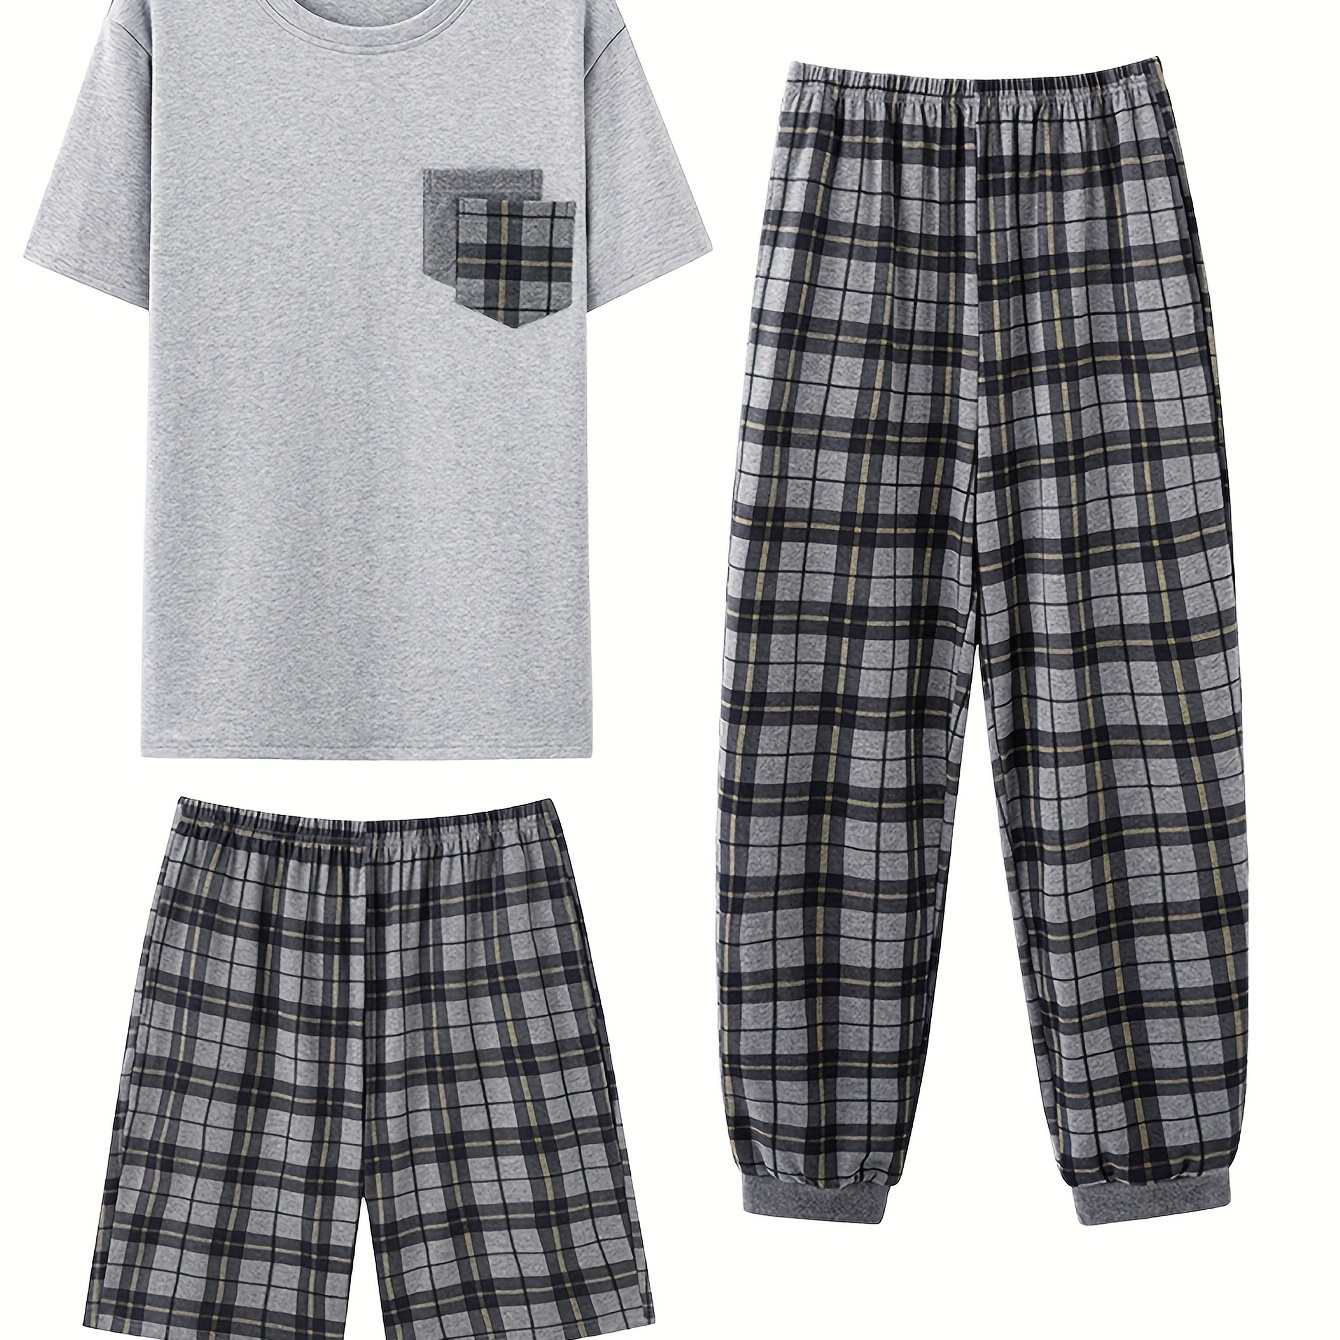 

3pcs Men's 100% Cotton Pajama Set Short Sleeve Crew Neck Front Pocket Top + Classic Plaid Shorts & Trouser Nightwear Loungewear Casual & Stylish Pj Outfits For Men